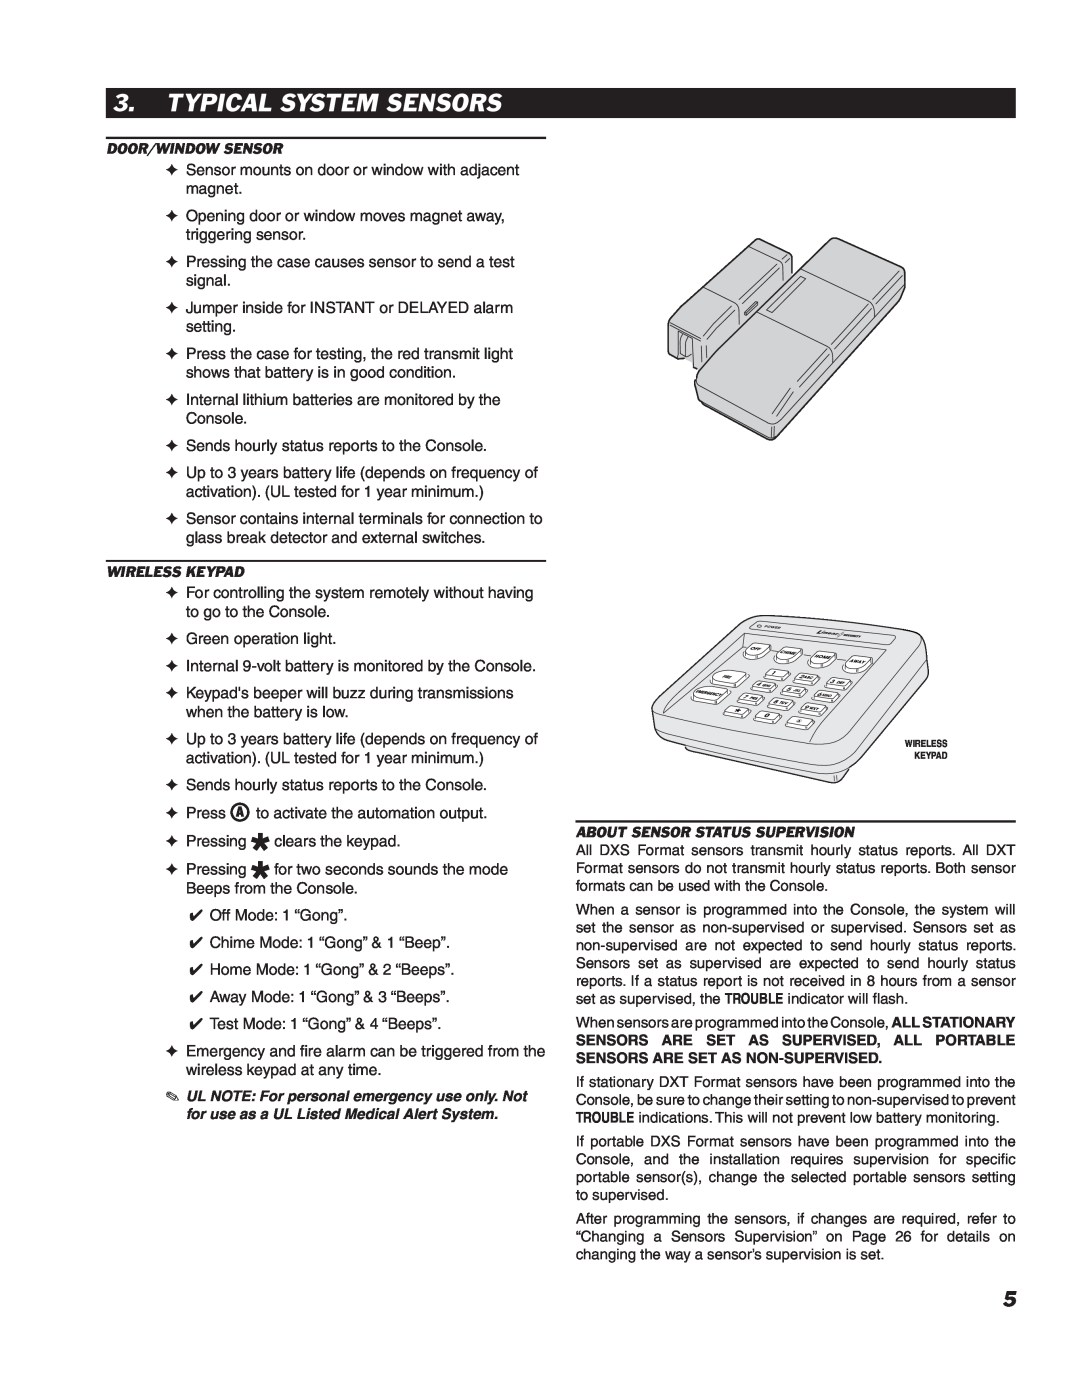 Linear DVS-2400 manual Typical System Sensors, Door/Window Sensor, About Sensor Status Supervision, Wireless Keypad 